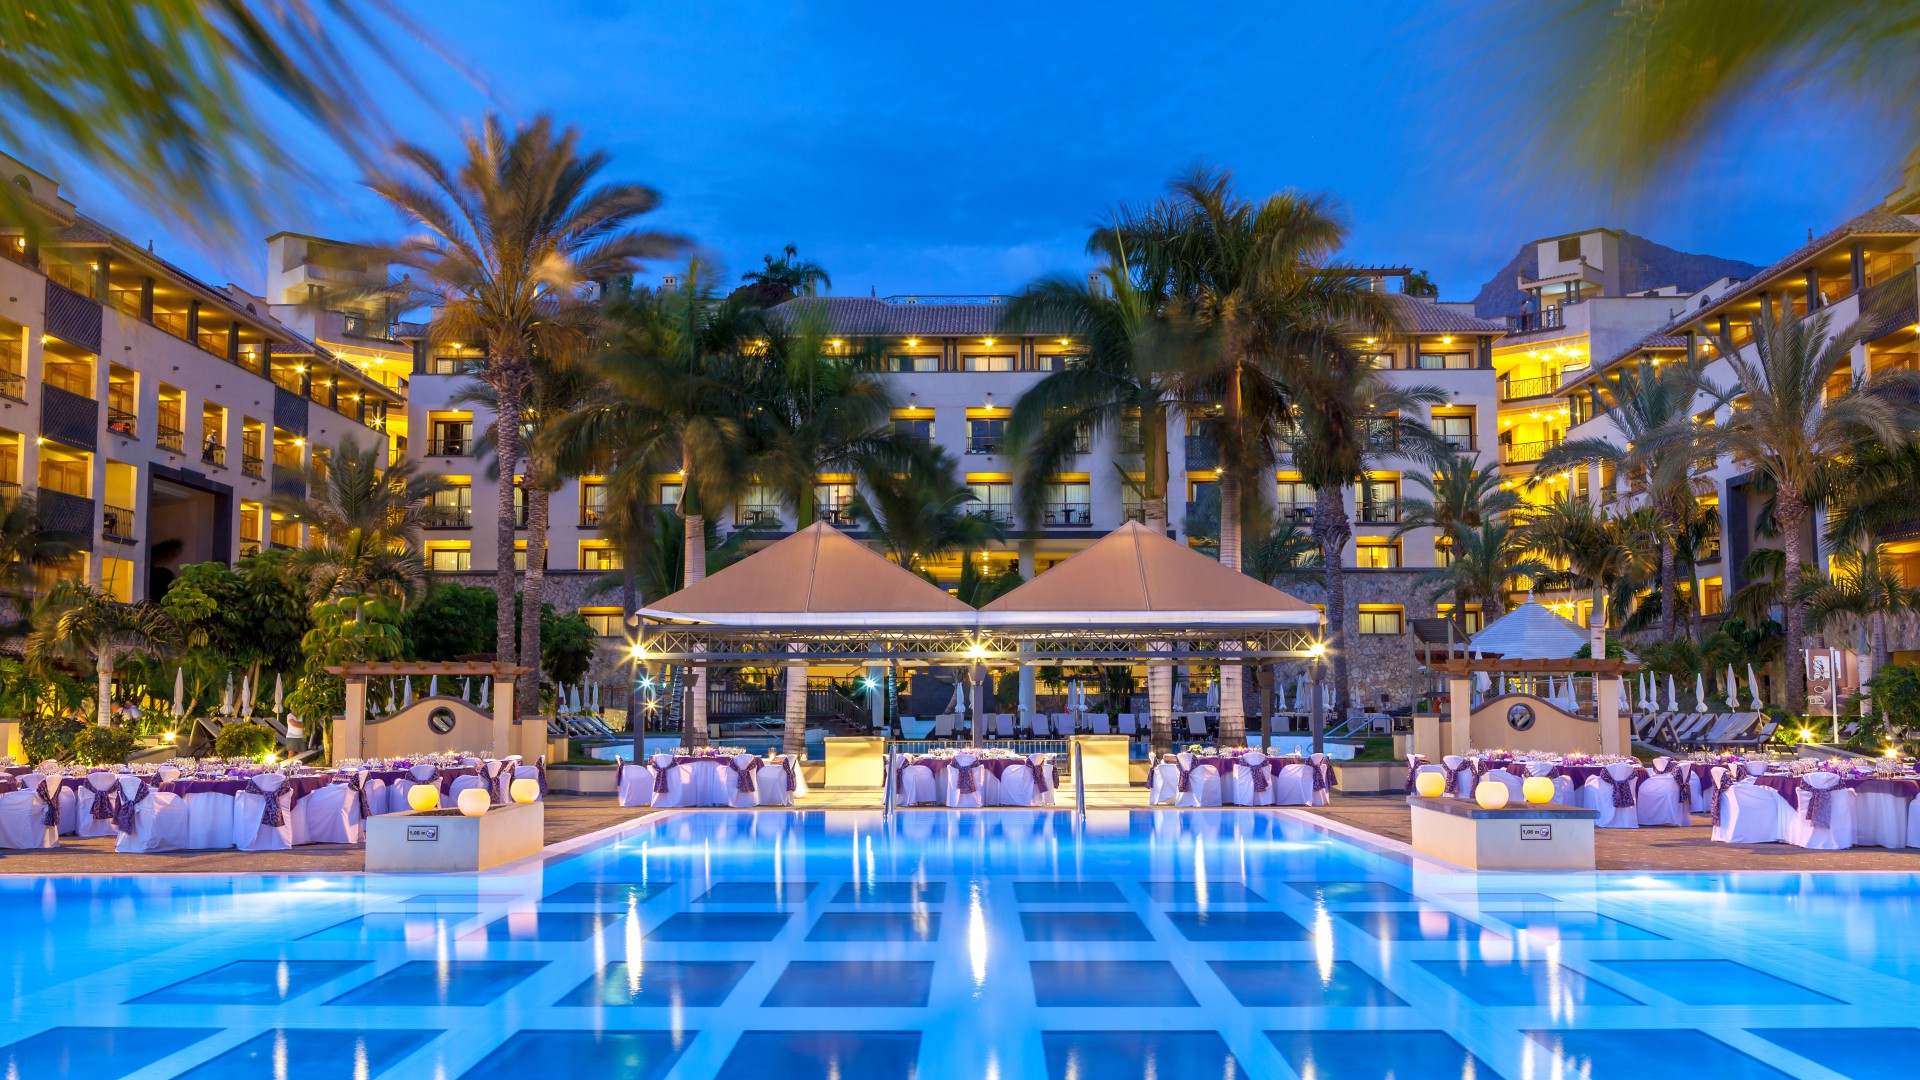 Costa Adeje Gran Hotel, Spain, Best Hotels of 2017, tourism, travel, resort, vacation, pool (horizontal)